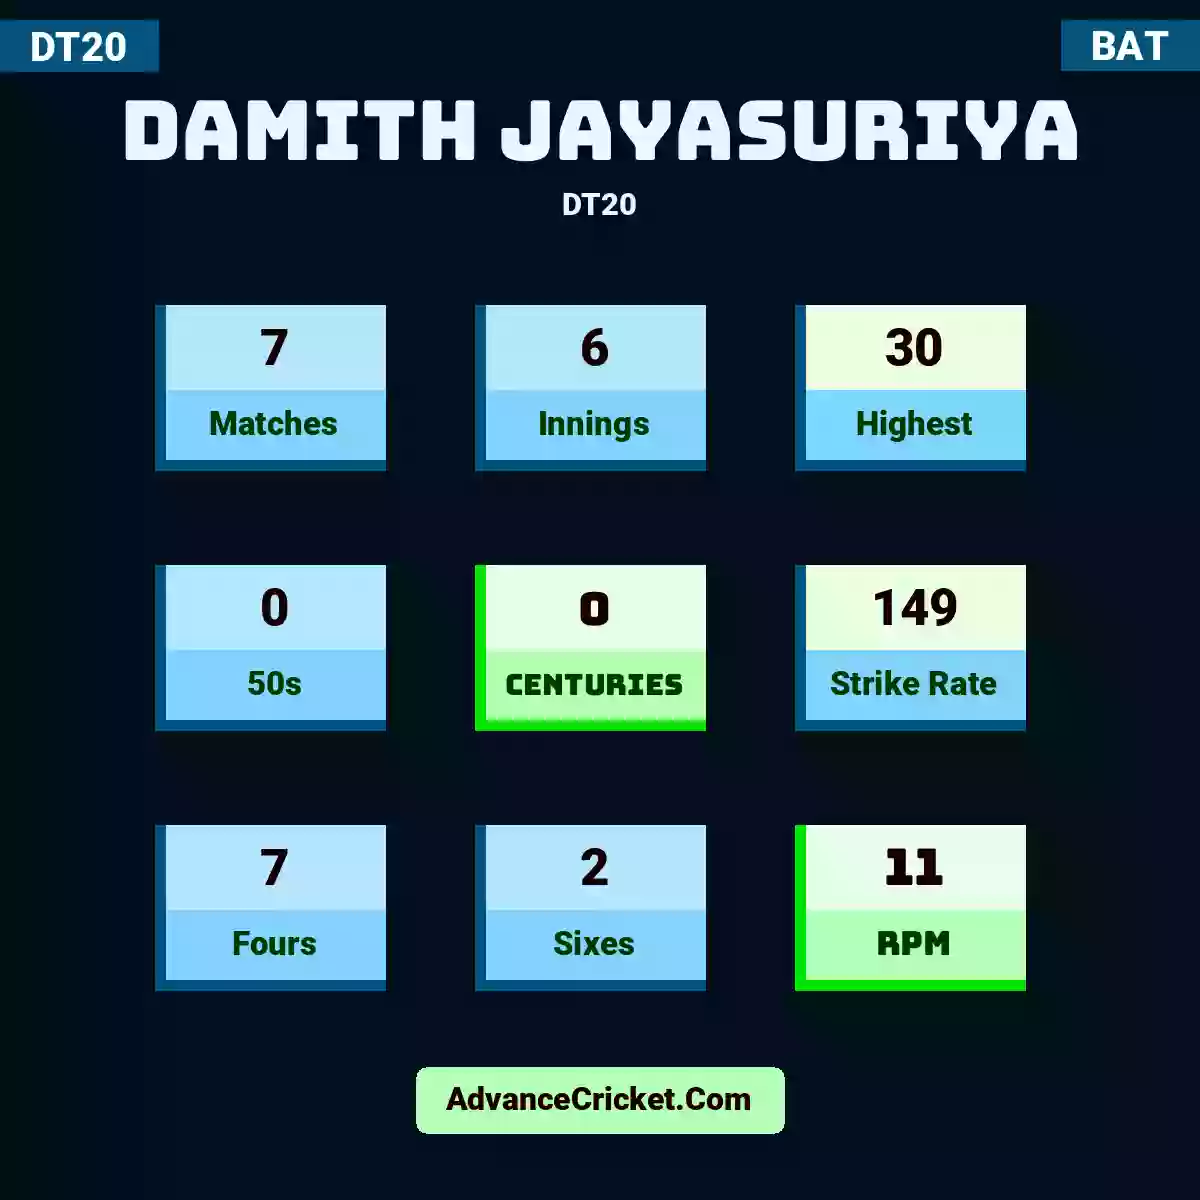 Damith Jayasuriya DT20 , Damith Jayasuriya played 7 matches, scored 30 runs as highest, 0 half-centuries, and 0 centuries, with a strike rate of 149. D.Jayasuriya hit 7 fours and 2 sixes, with an RPM of 11.